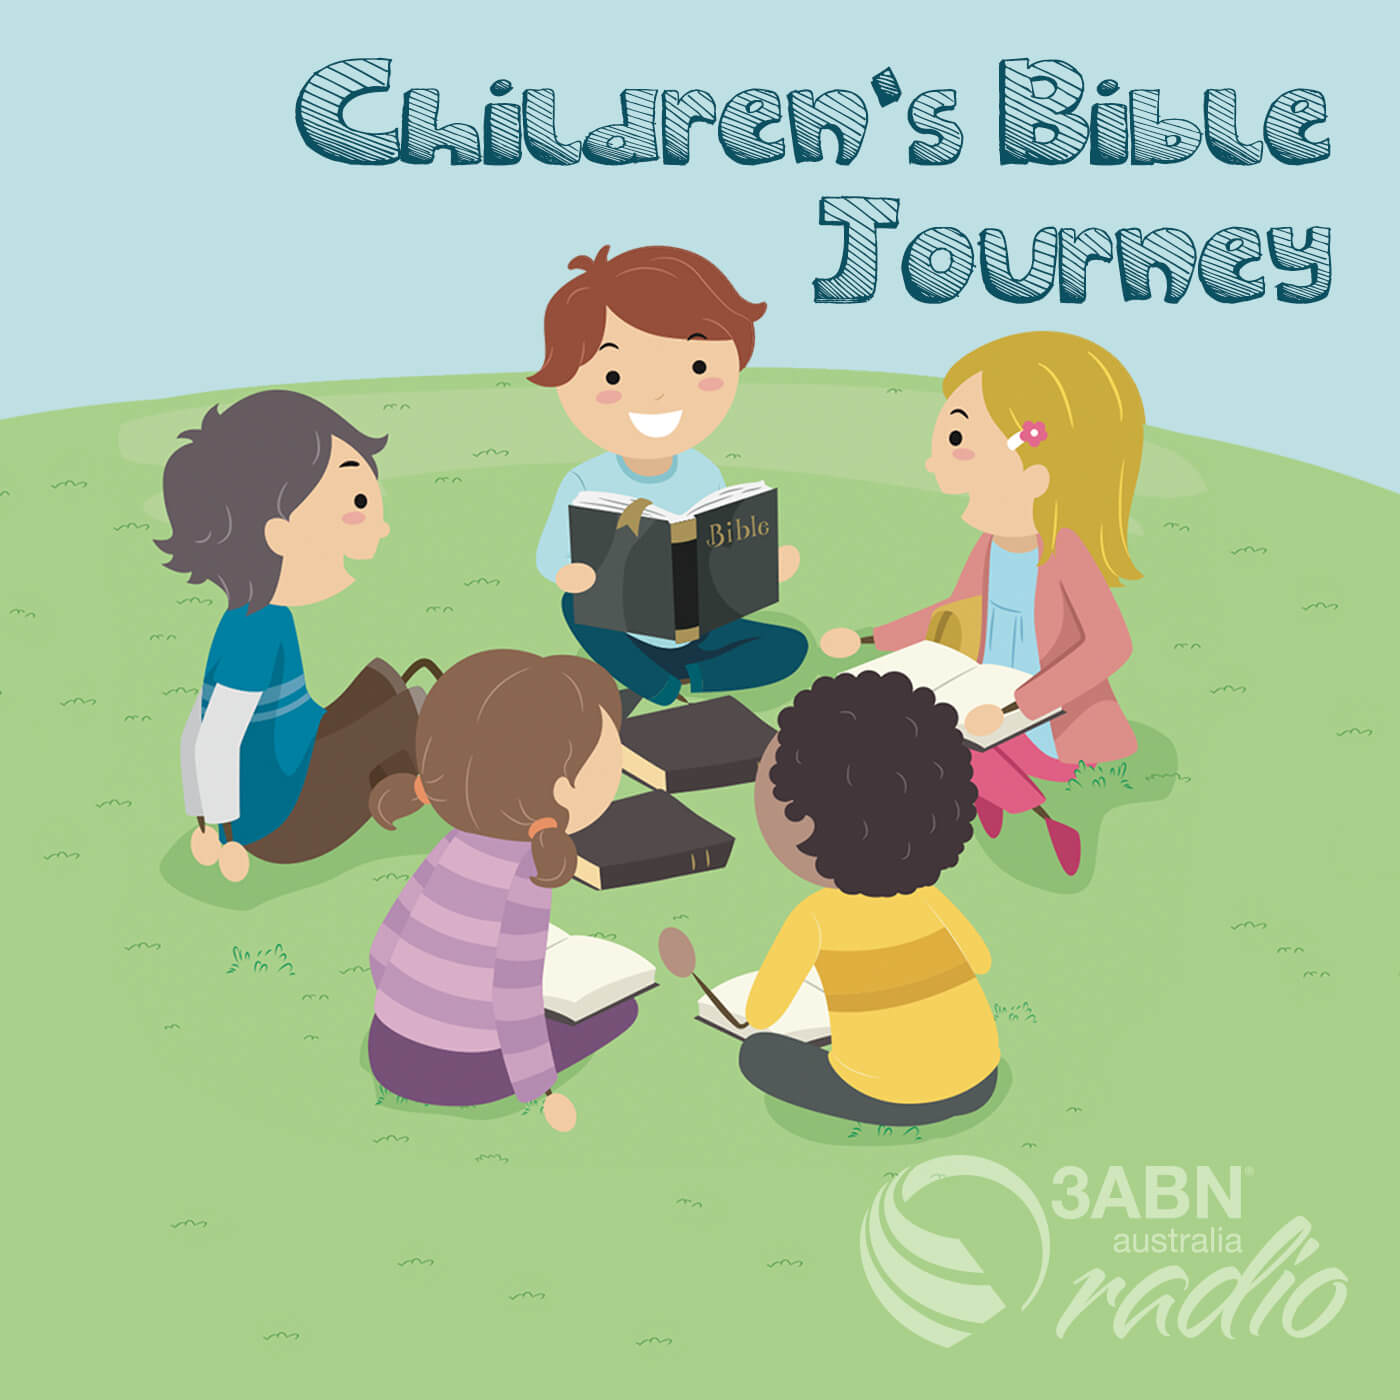 Children's Bible Journey - 2178